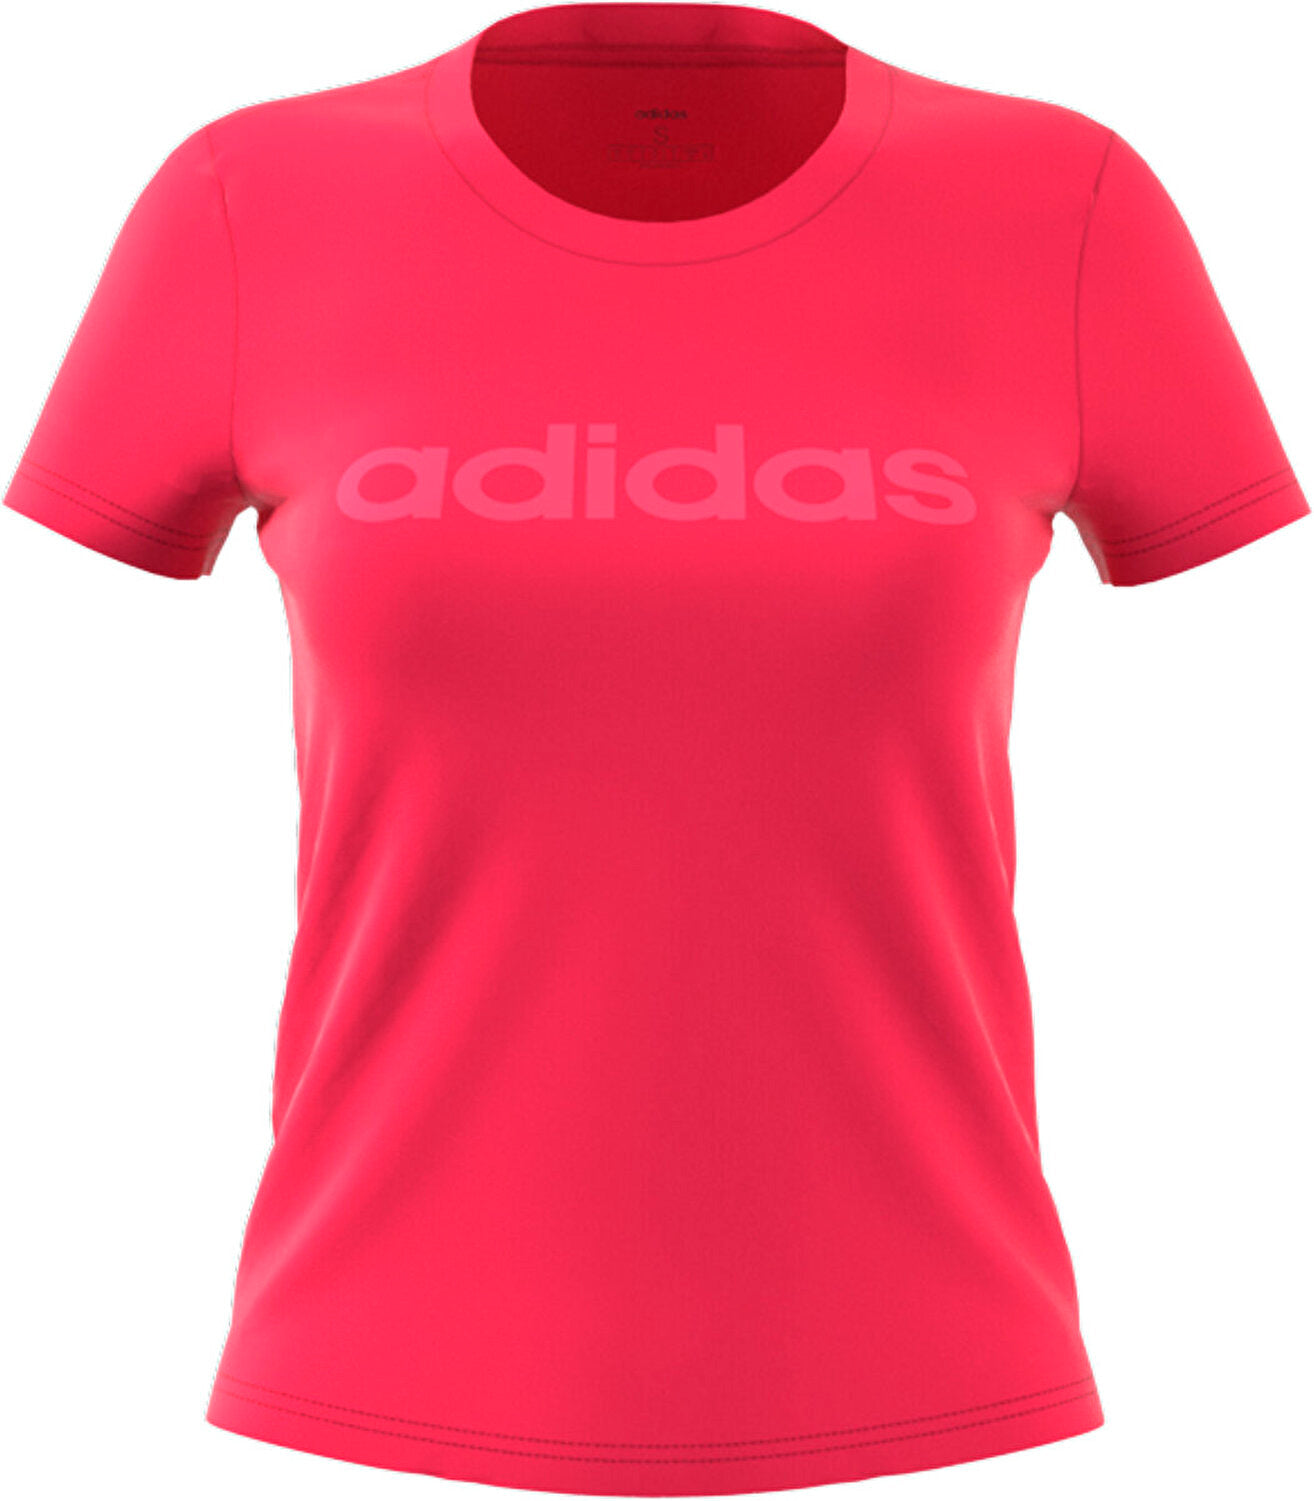 Adidas women’s training t-shirt